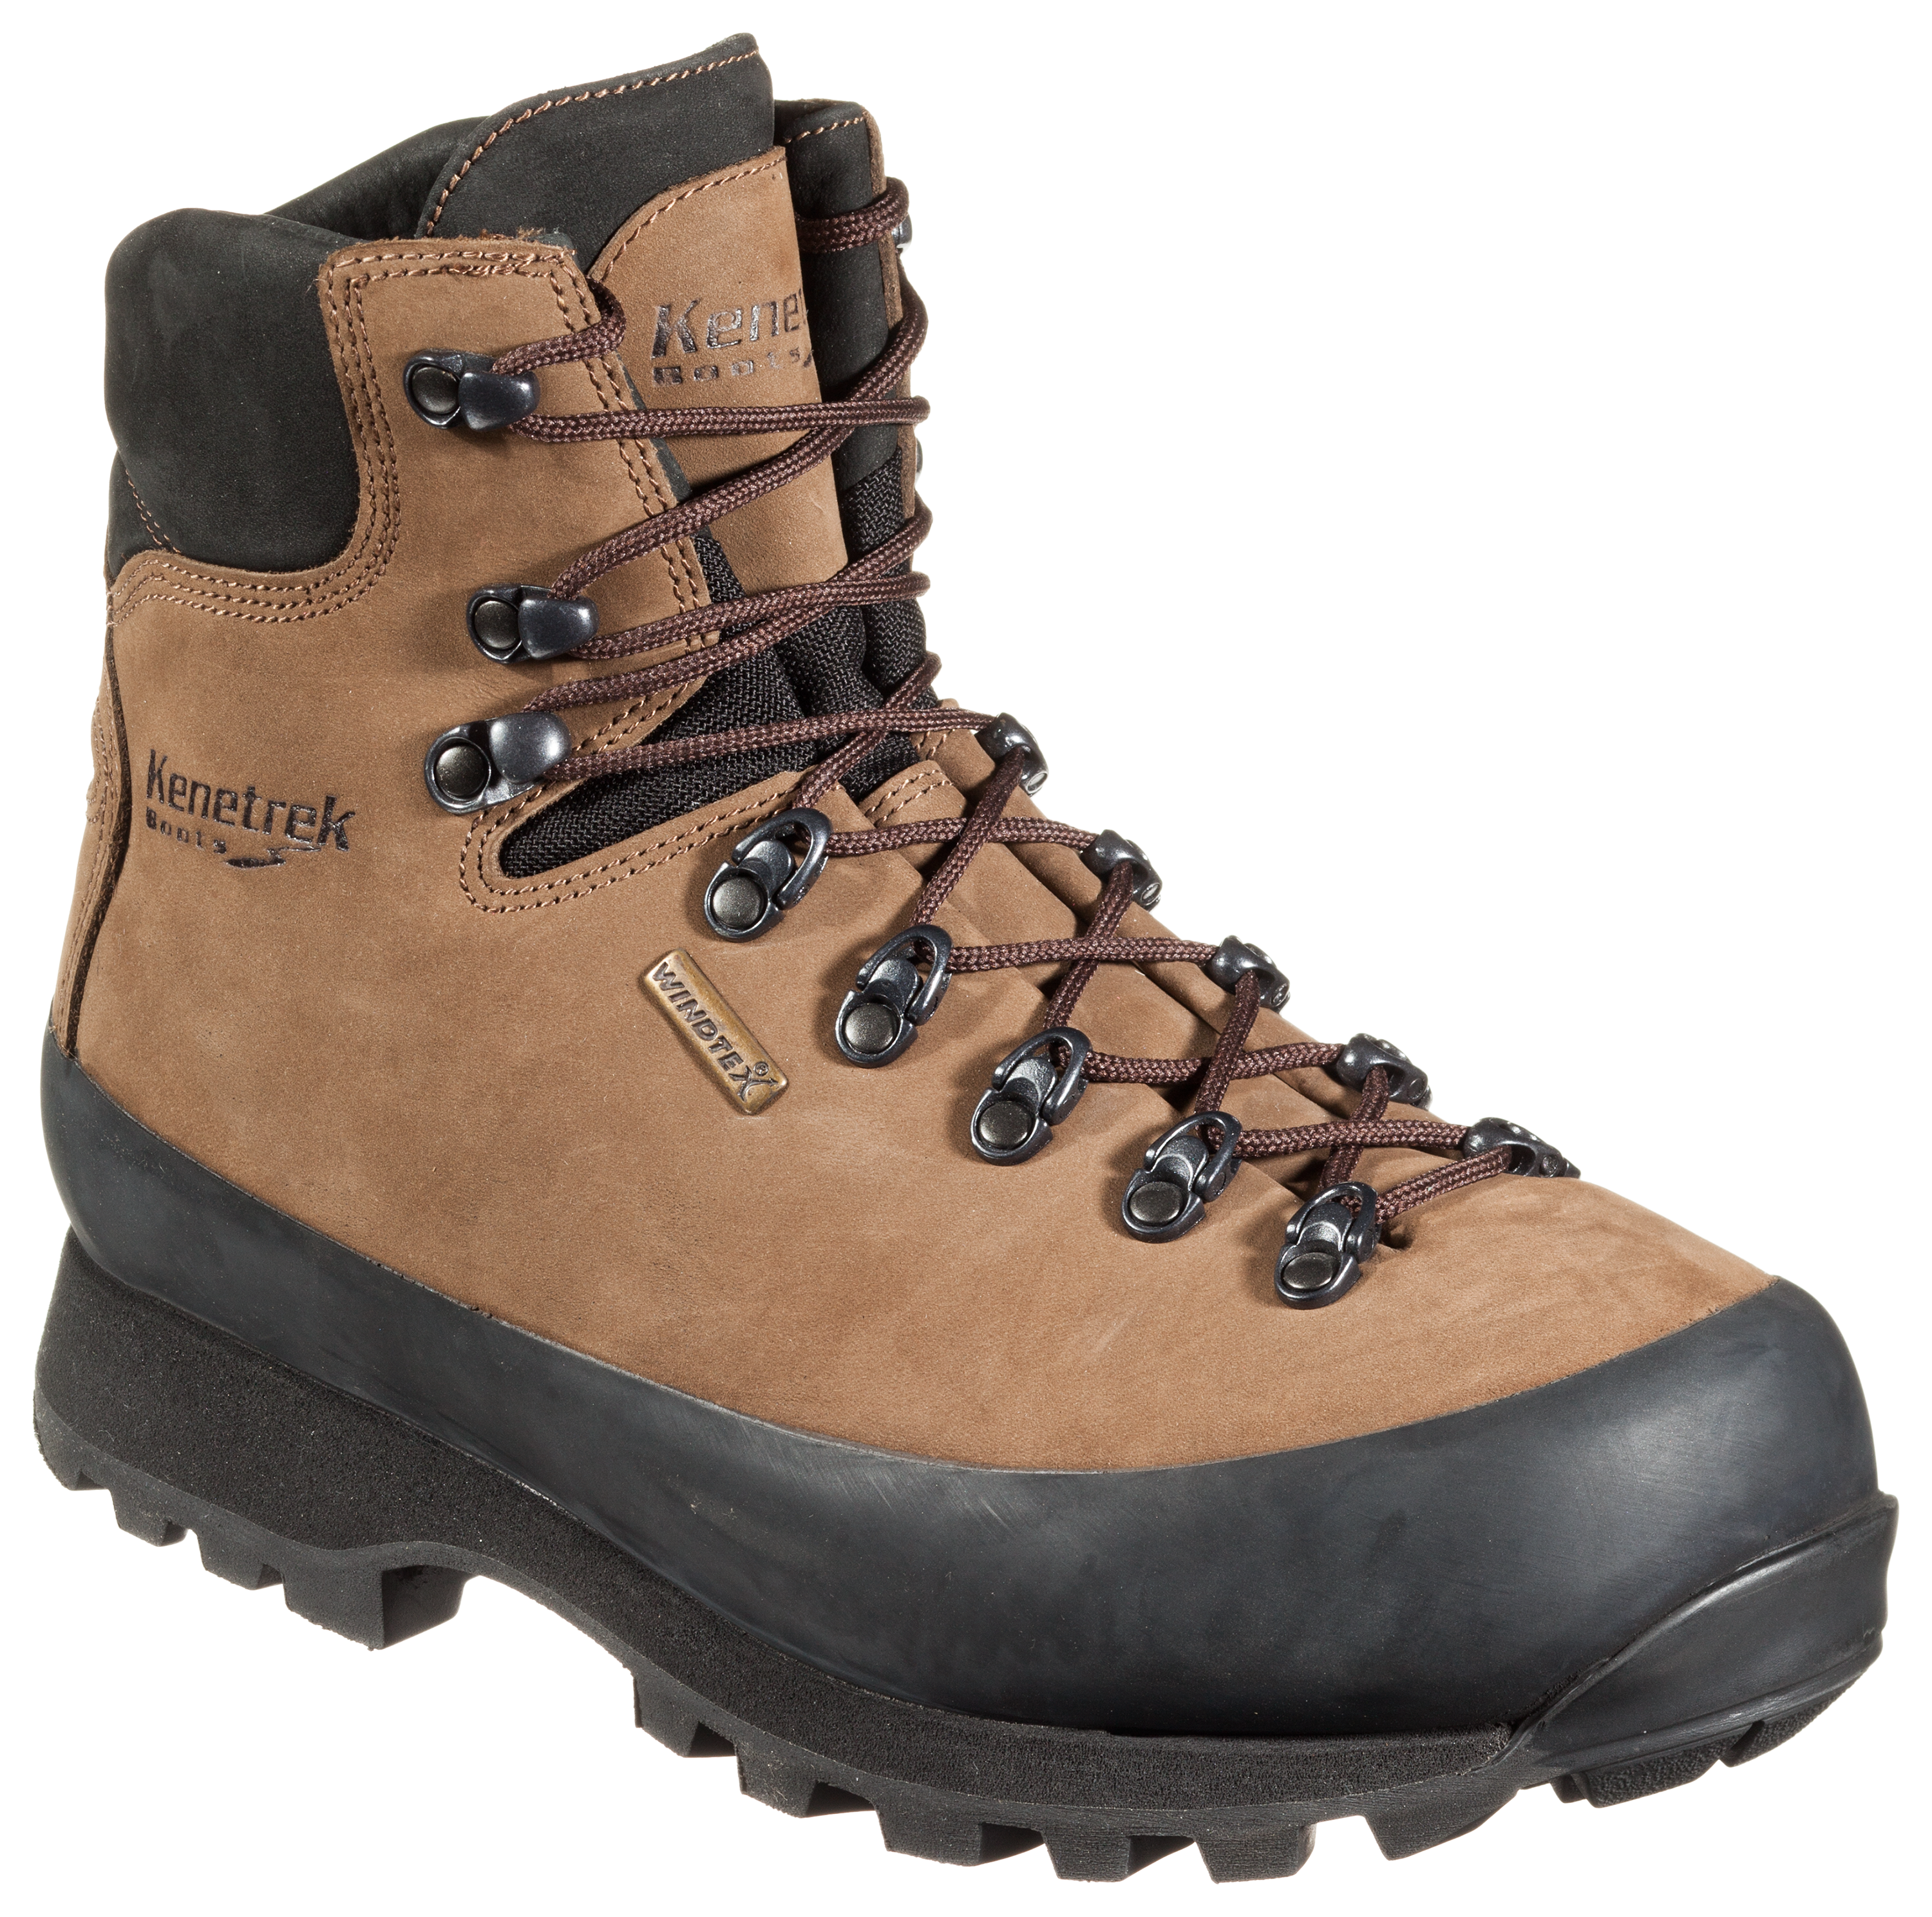 Kenetrek Hardscrabble Waterproof Hiking Boots for Men - Brown - 8M